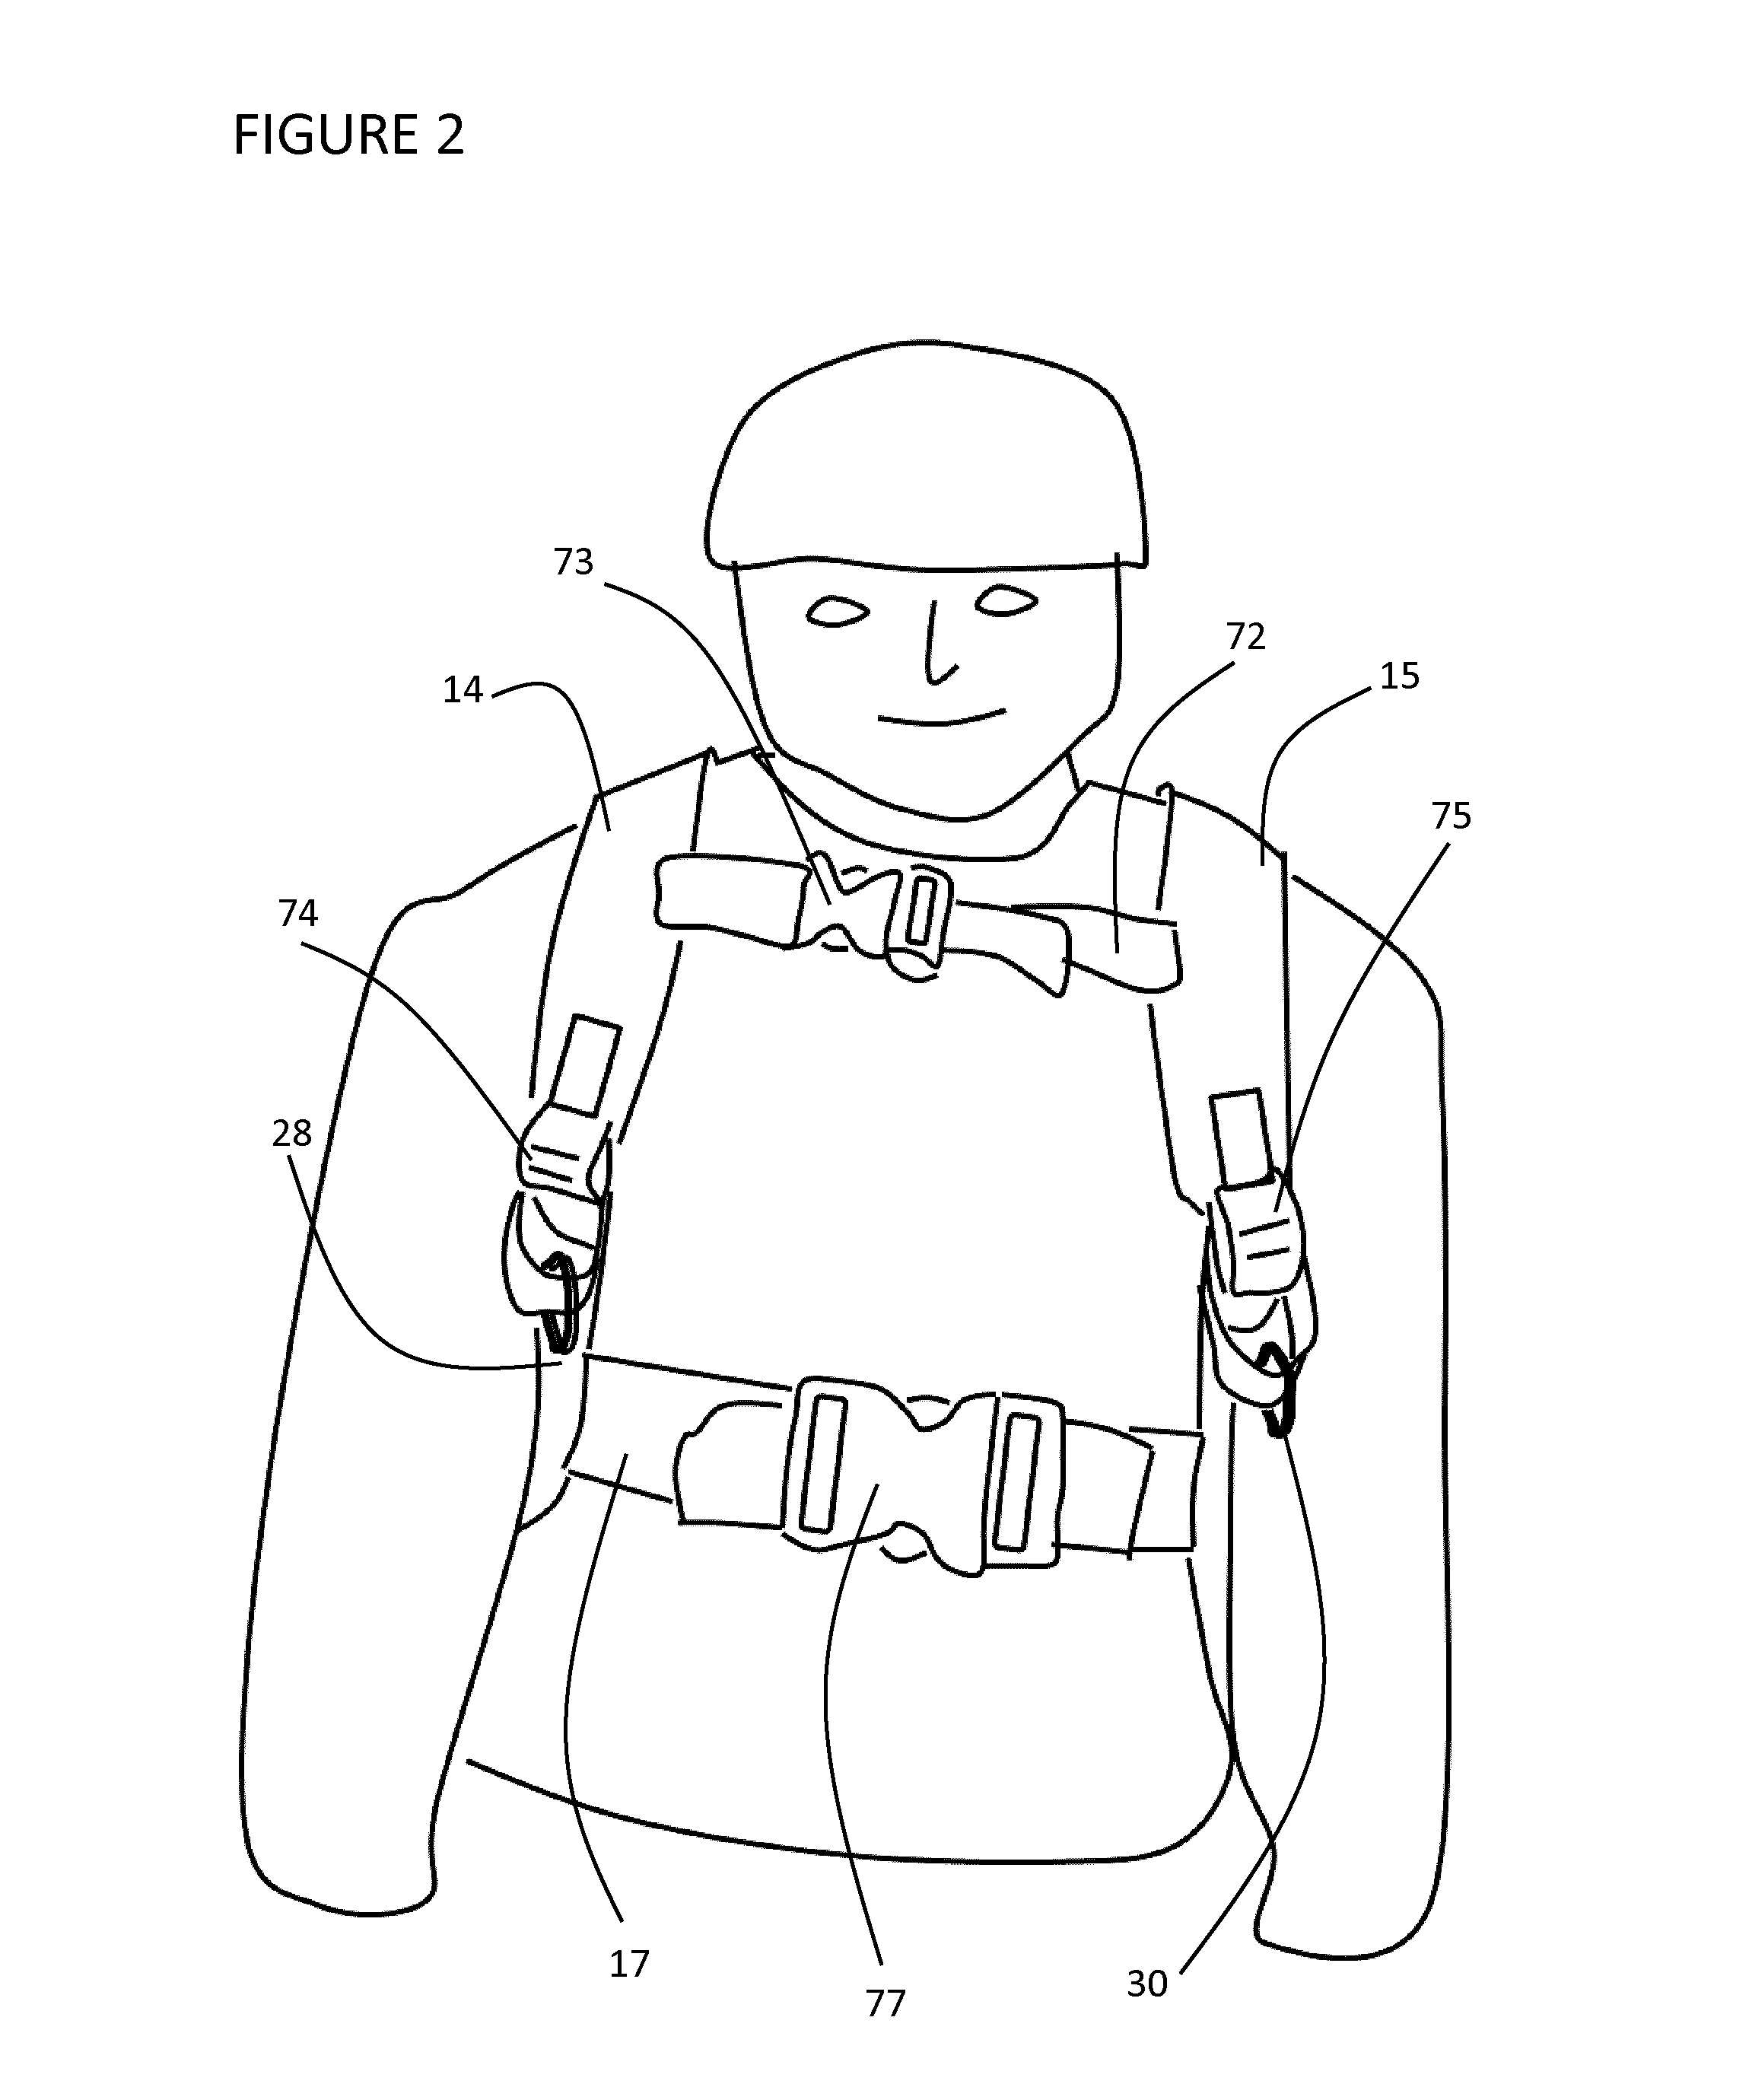 Tethered training harness